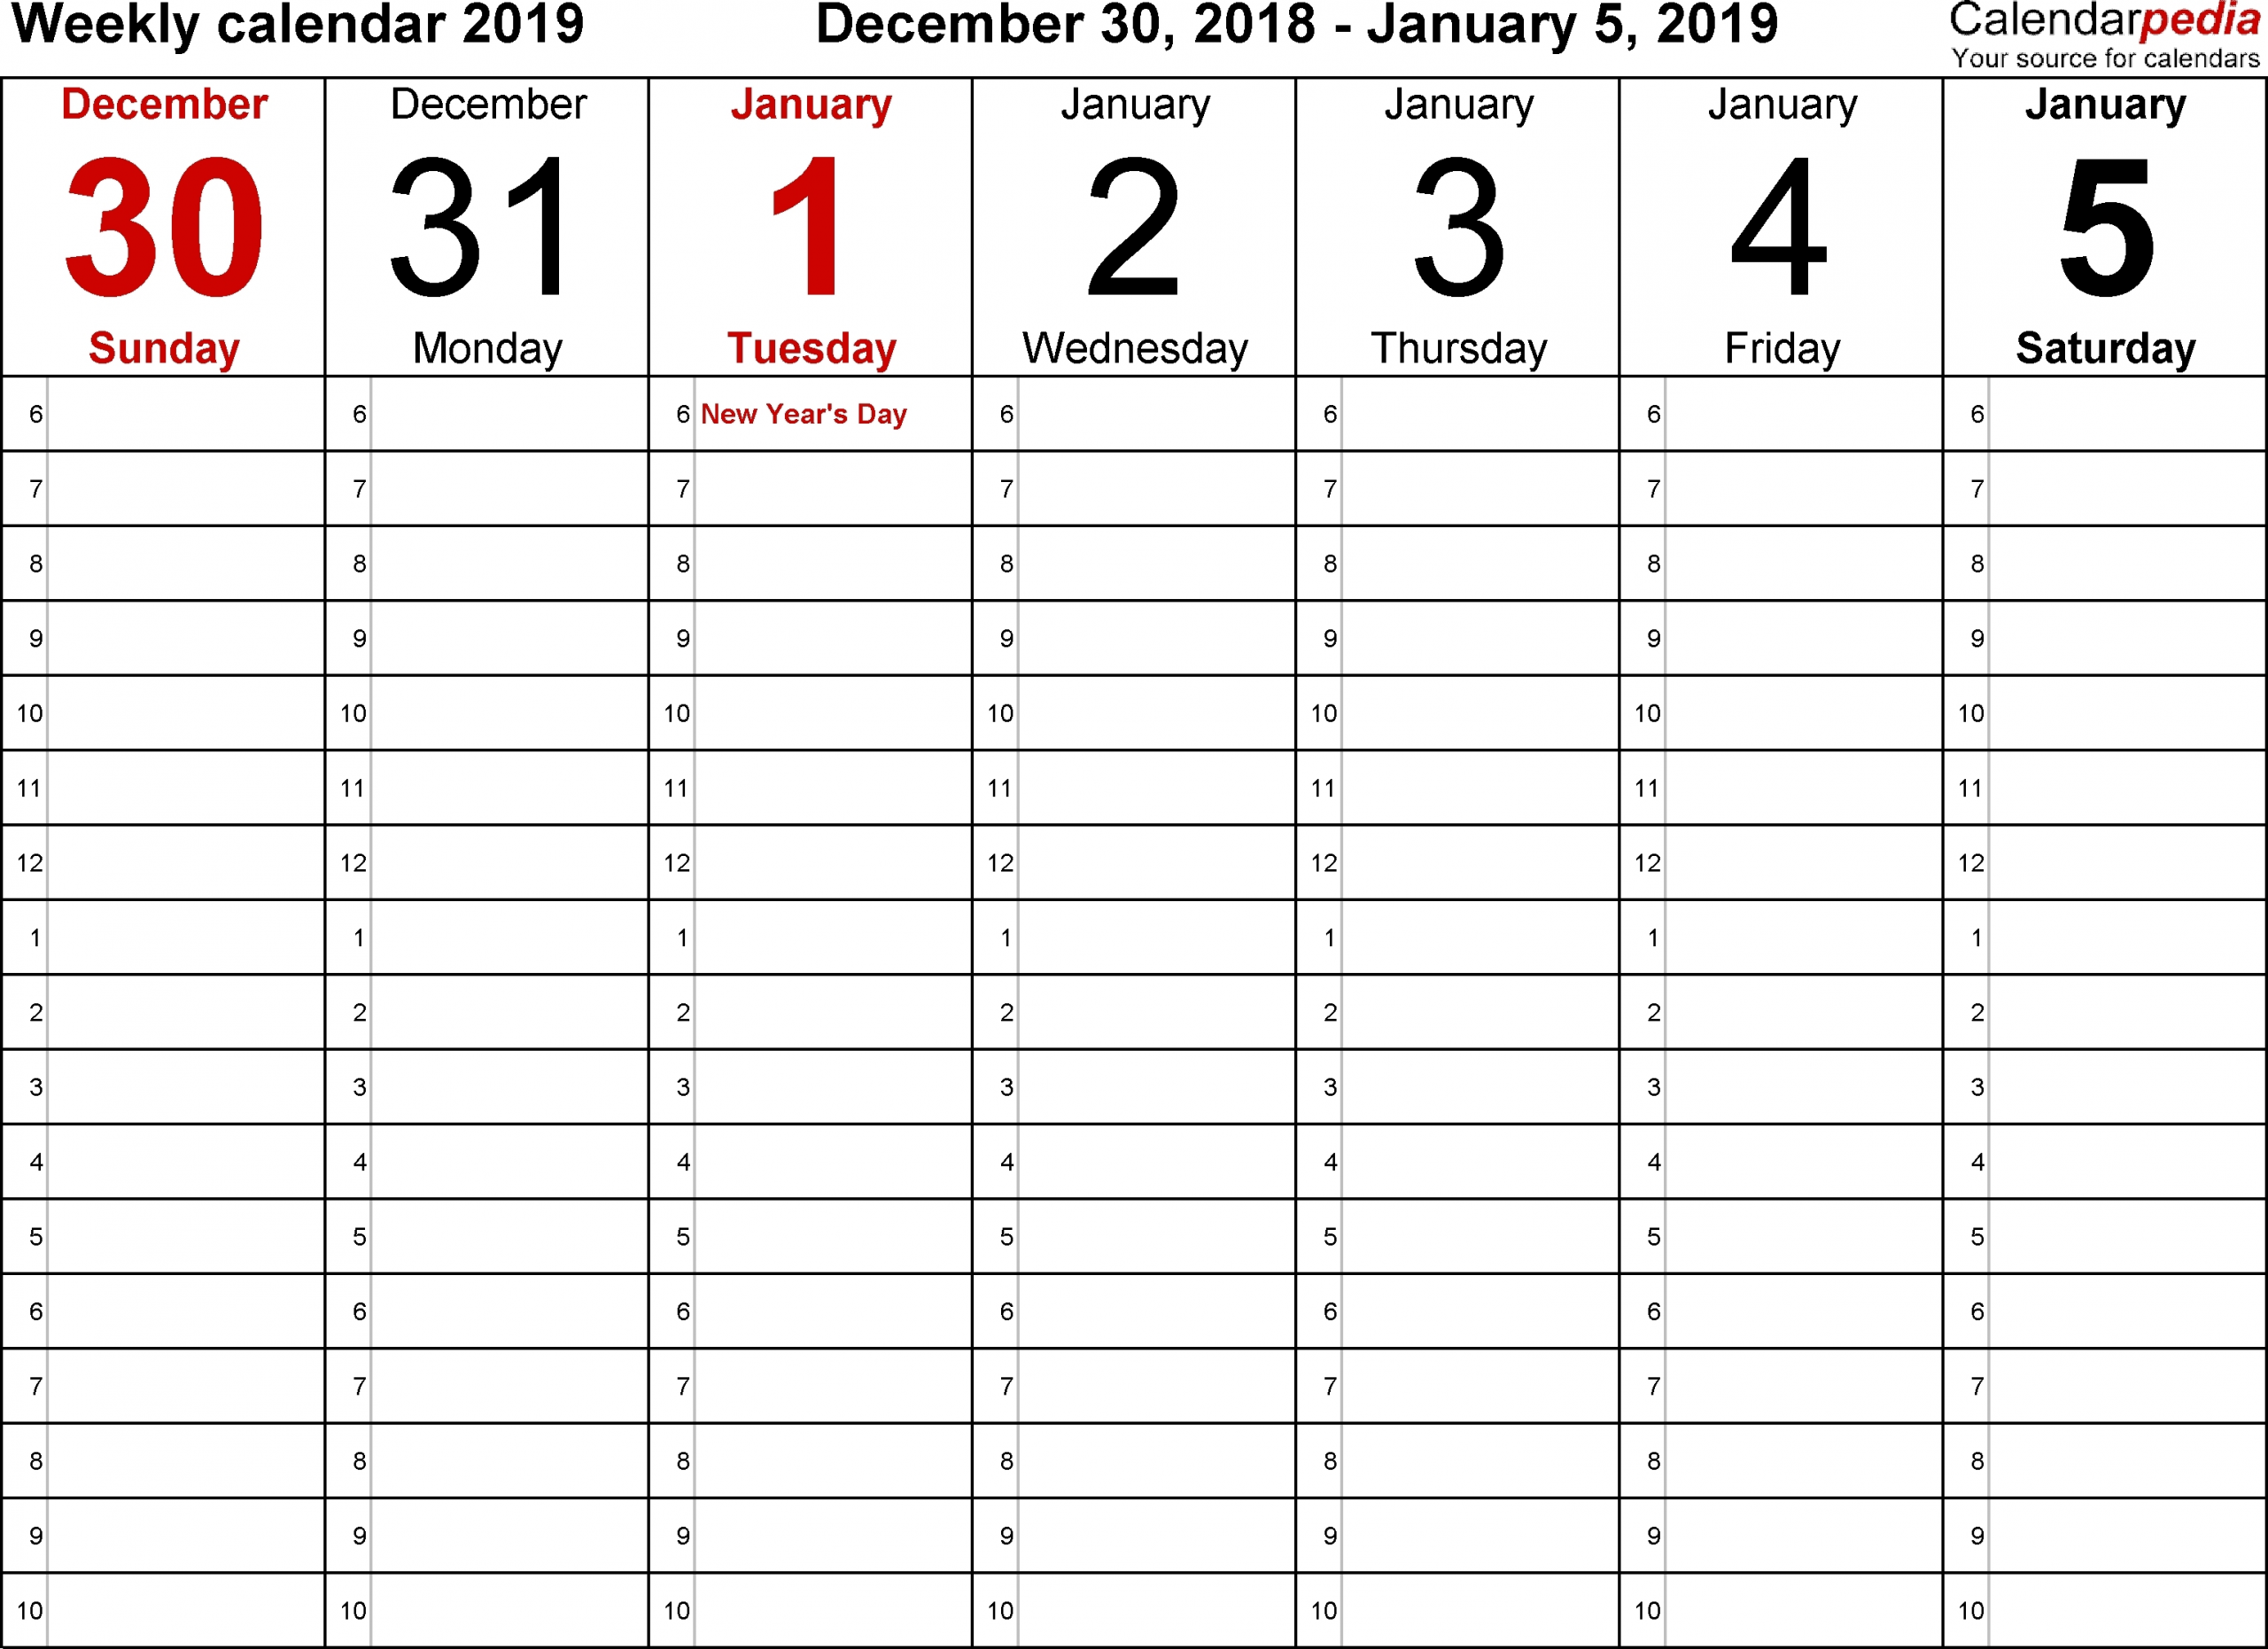 5 day week blank calendar with time slots printable